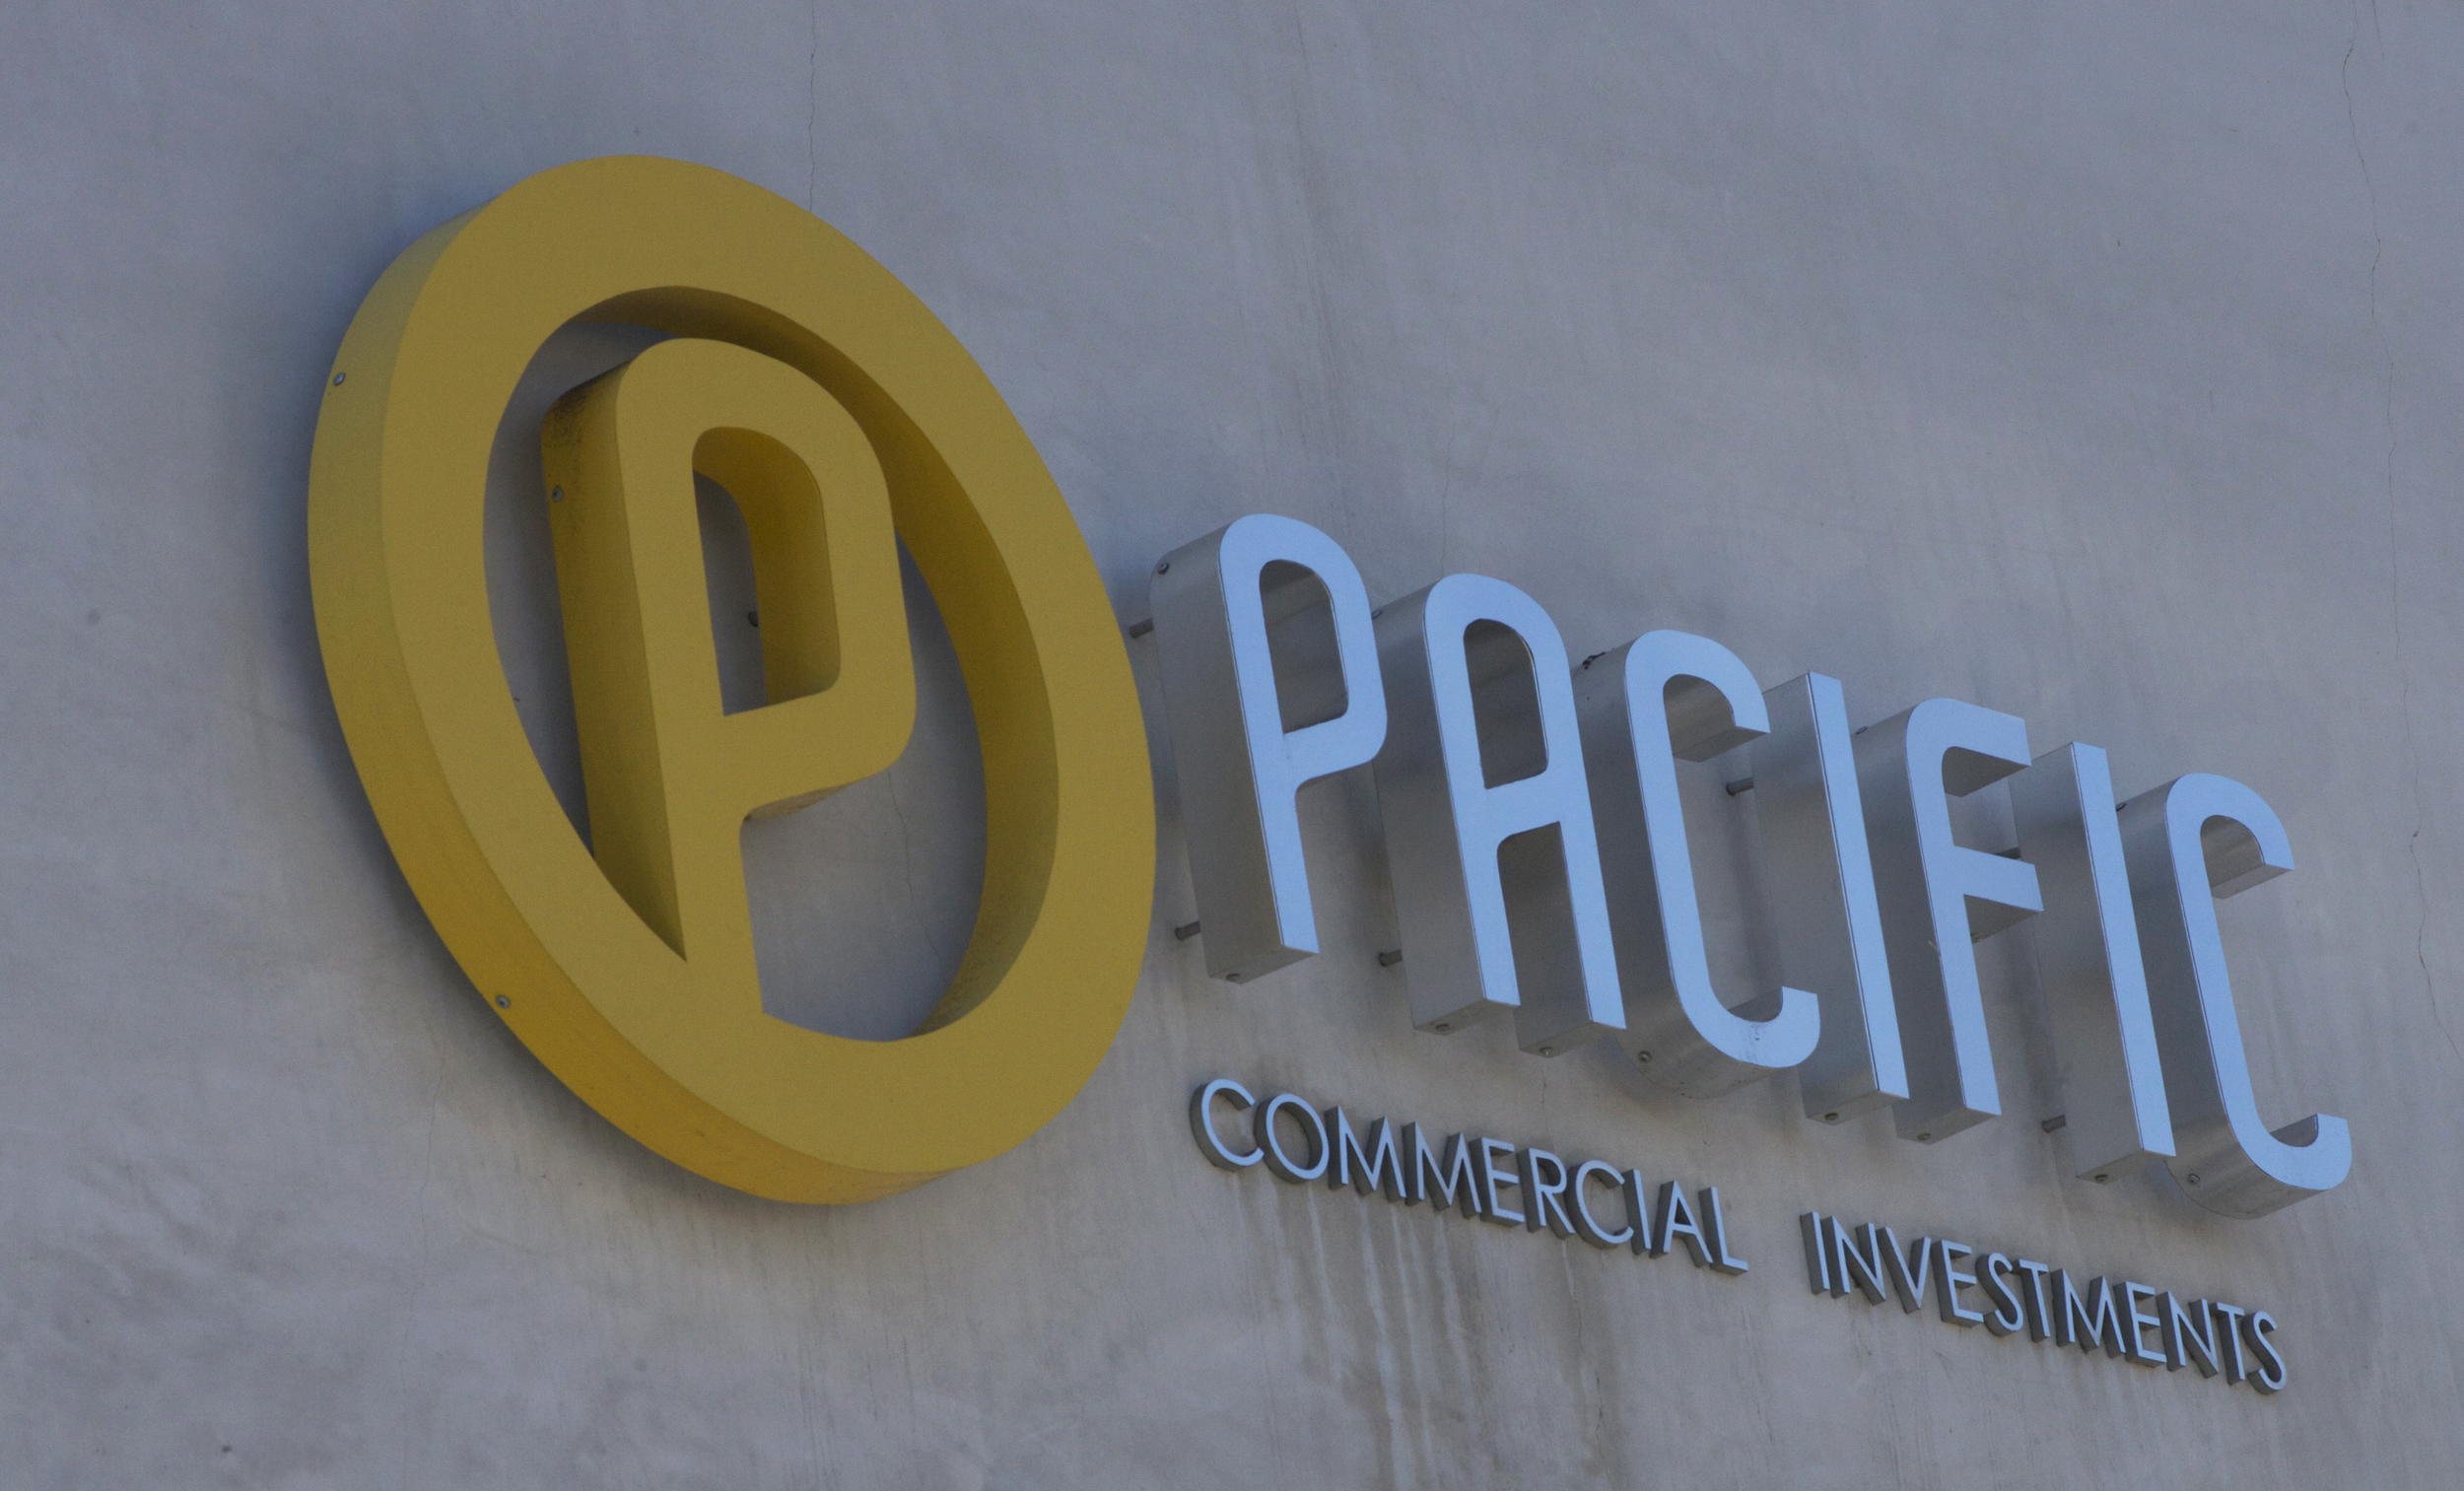 pacific_logo.jpg